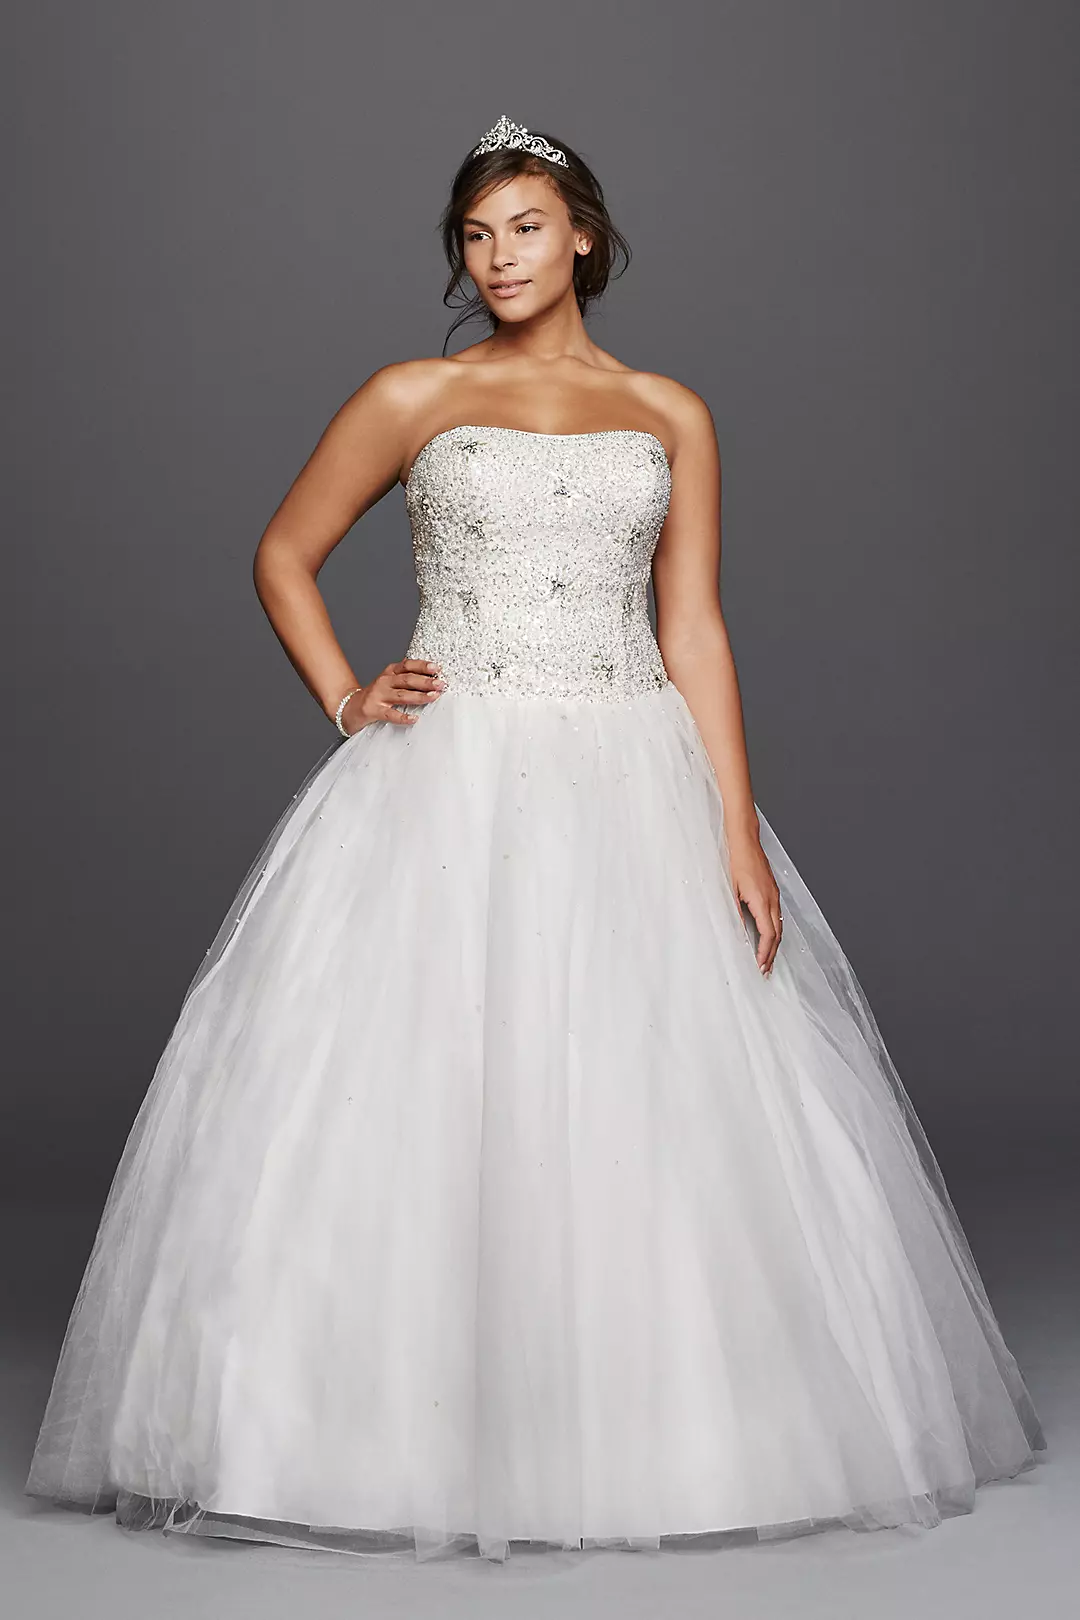 Jewel Beaded Tulle Ball Gown Wedding Dress Image